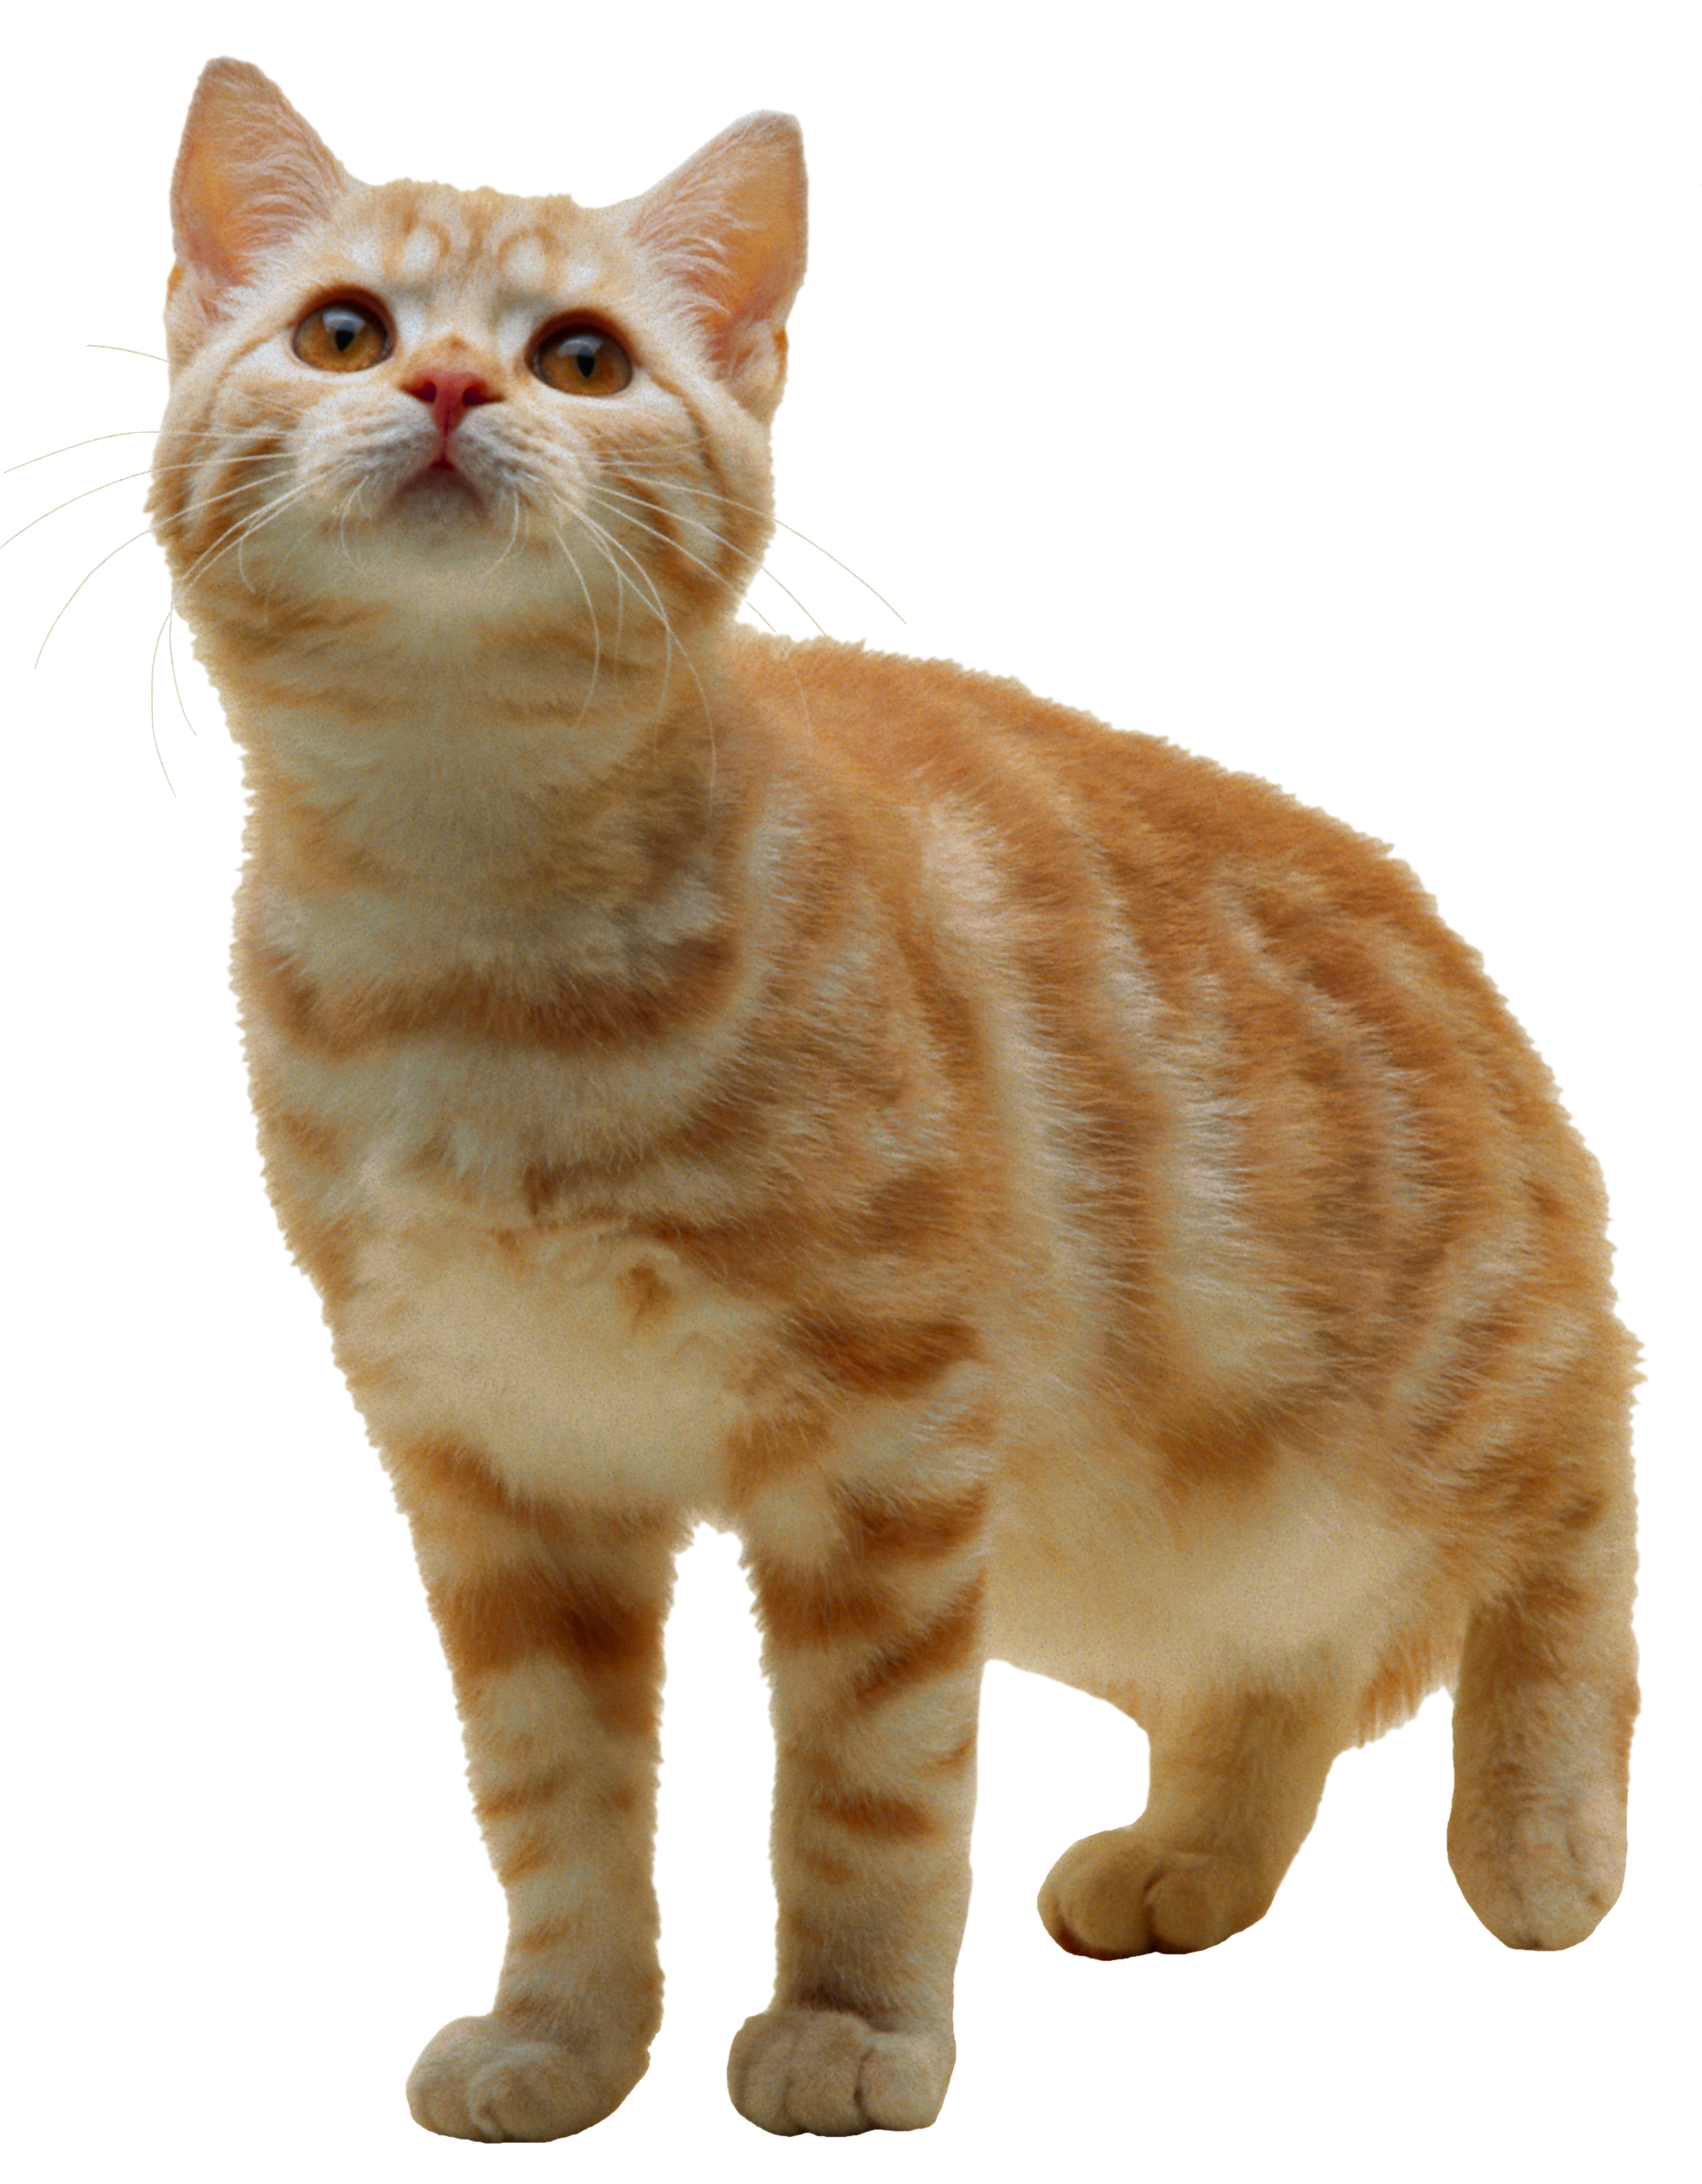 Cat PNG Transparent Image